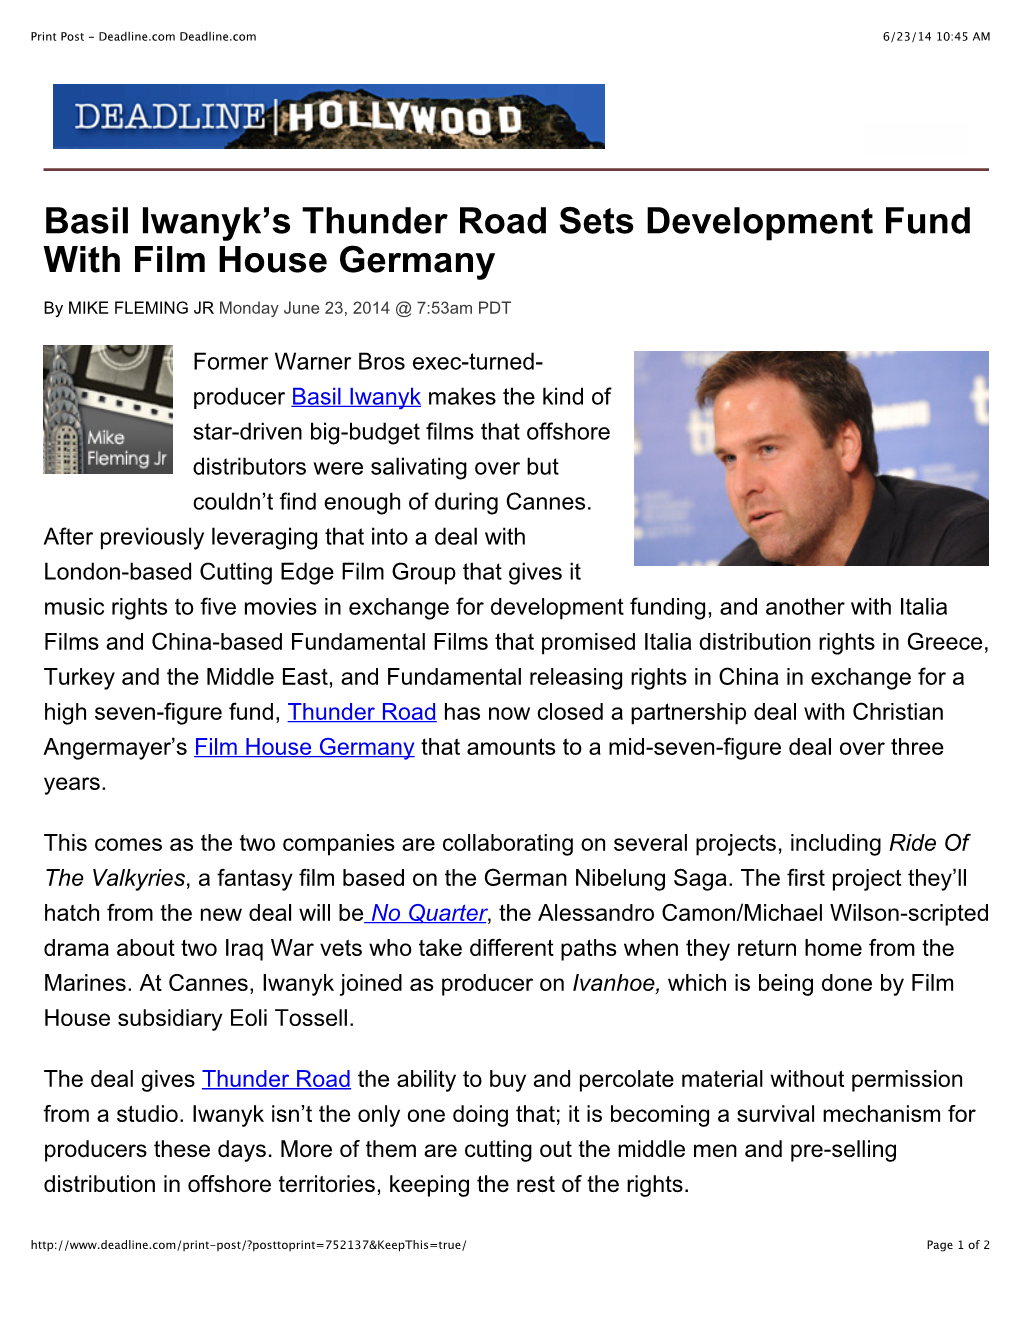 Basil Iwanyk's Thunder Road Sets Development Fund with Film